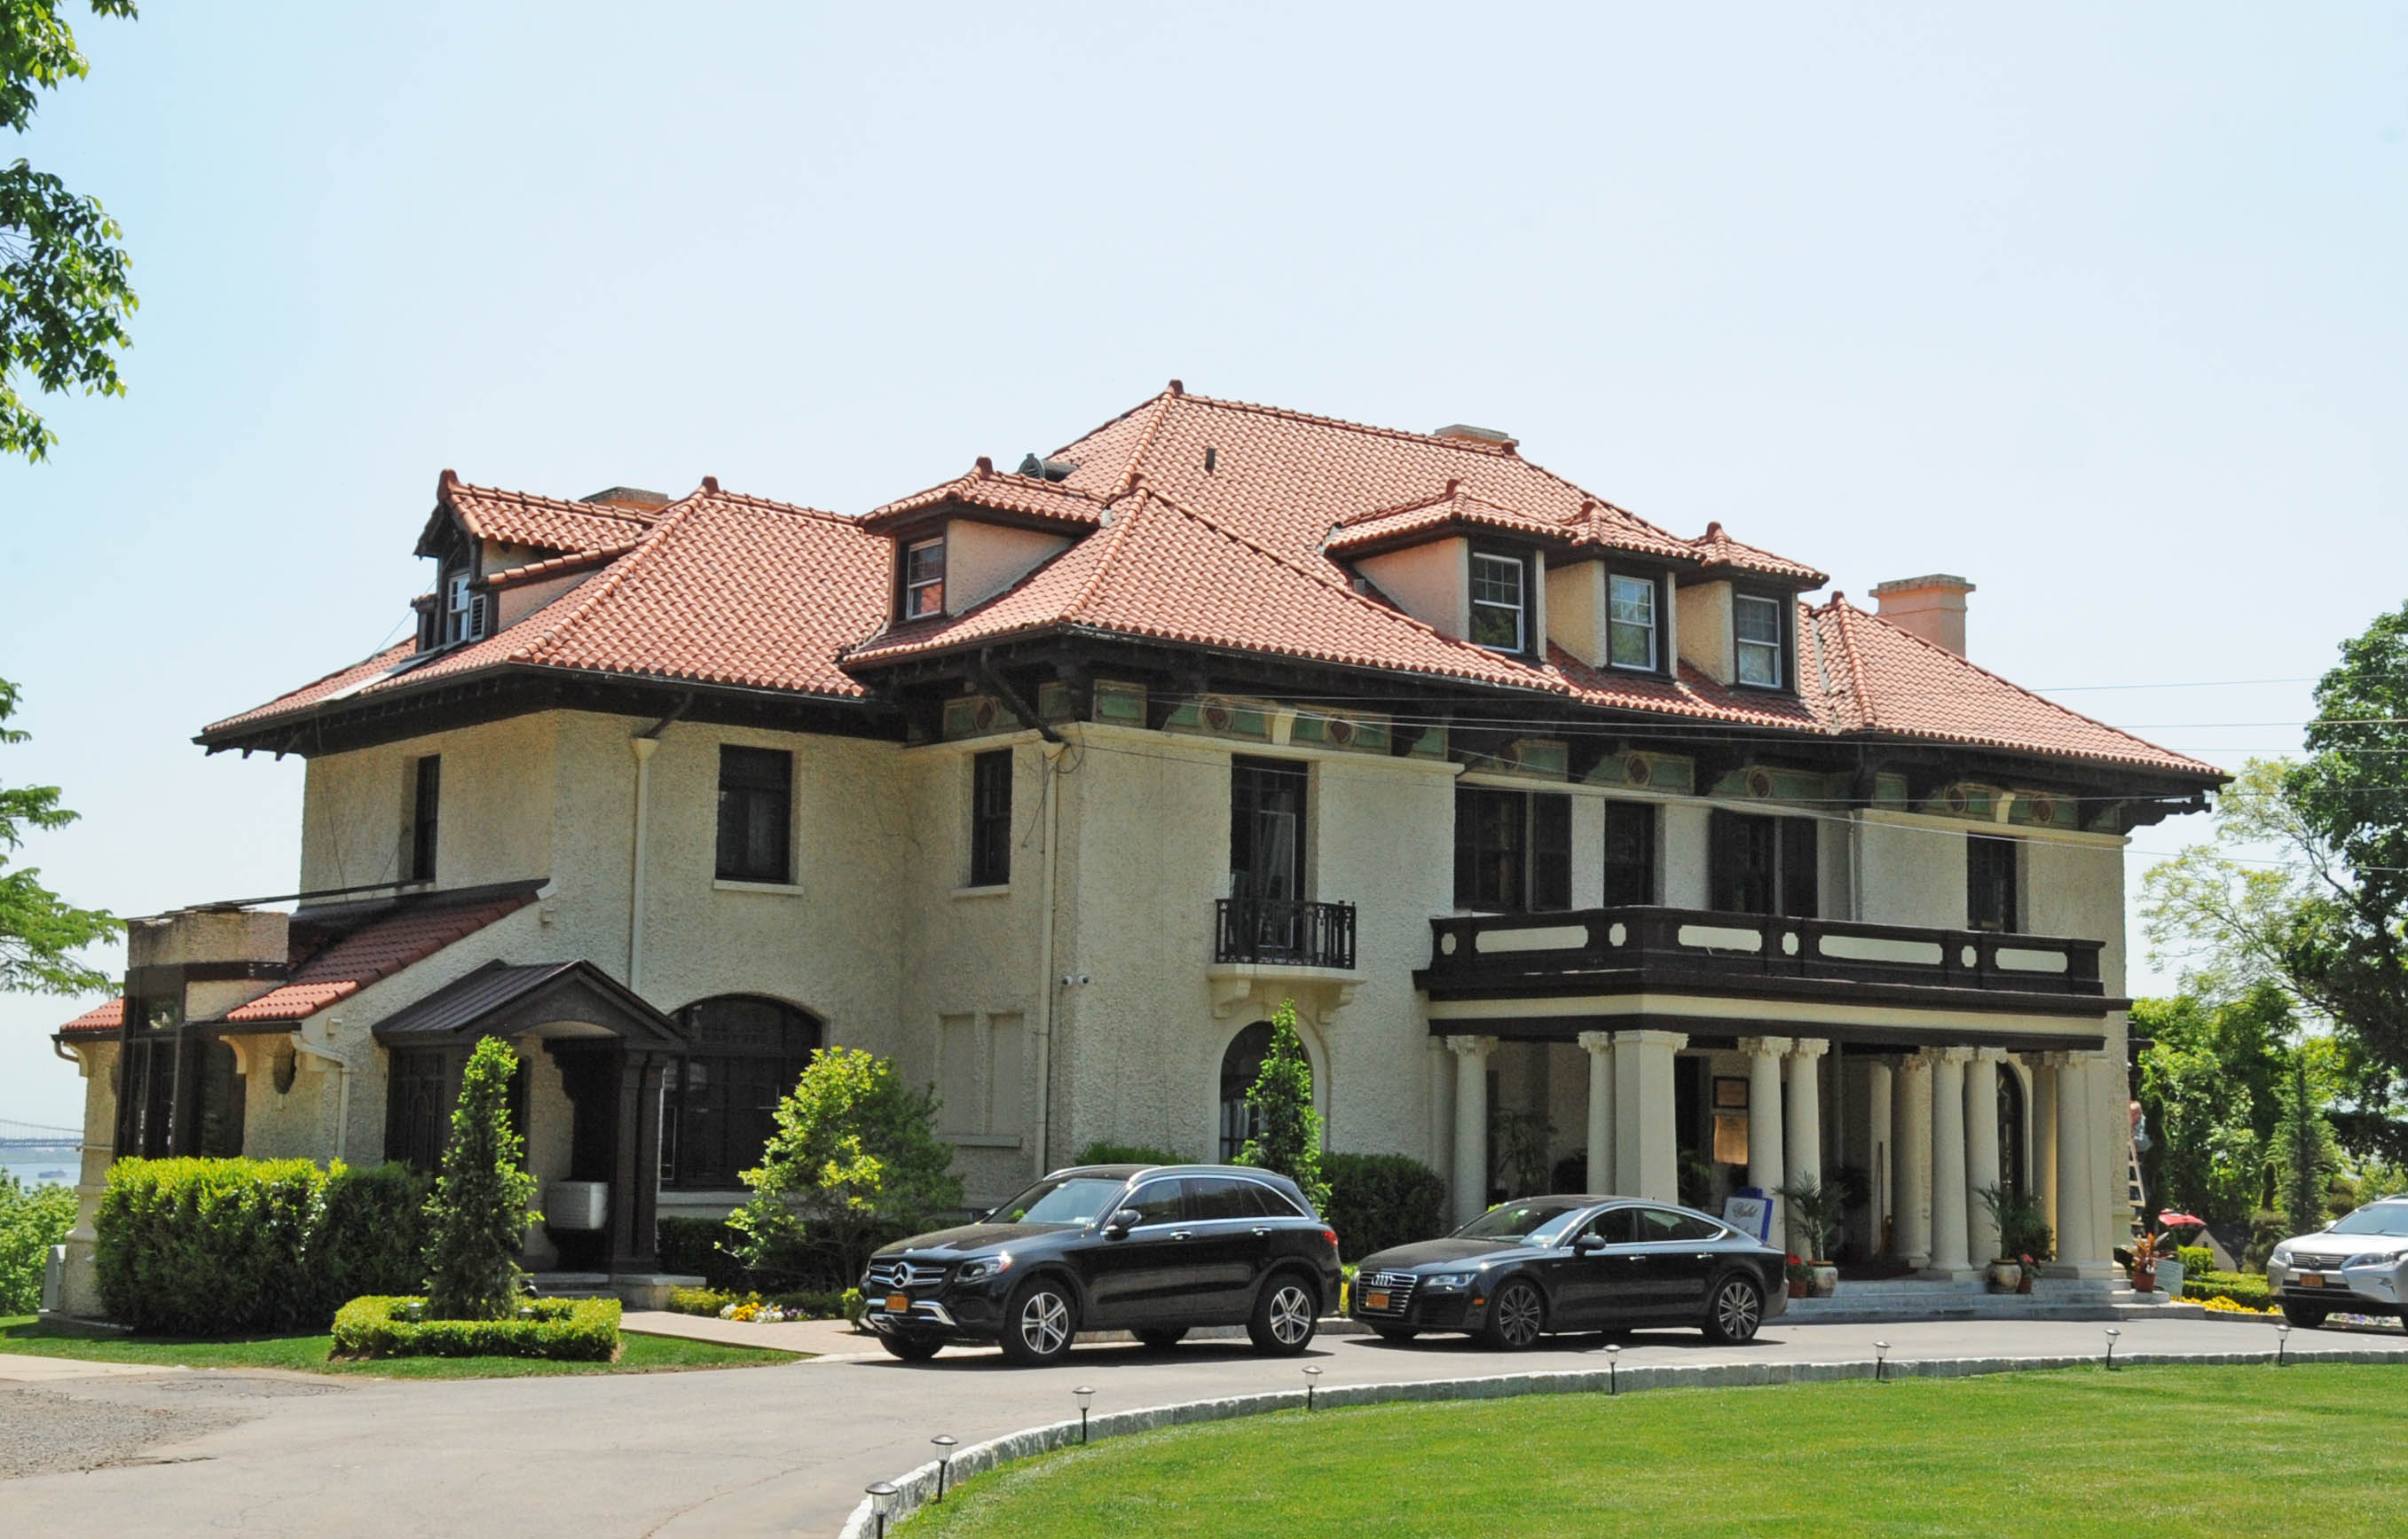 Casa Belvedere - Wikipedia